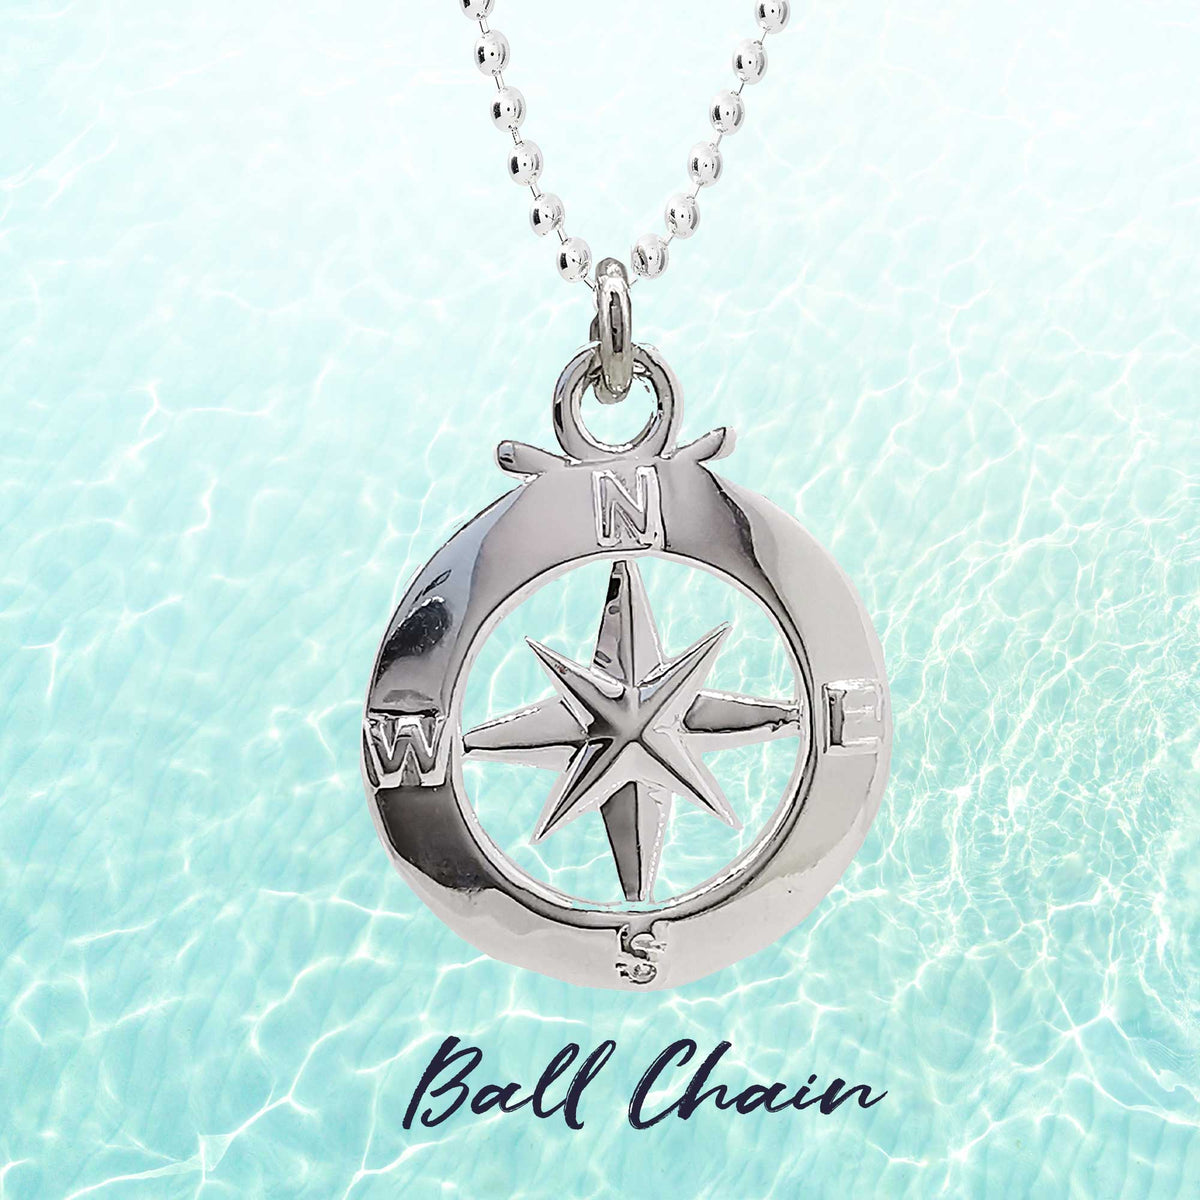 enamel compass necklace alternative saint christopher gift for him